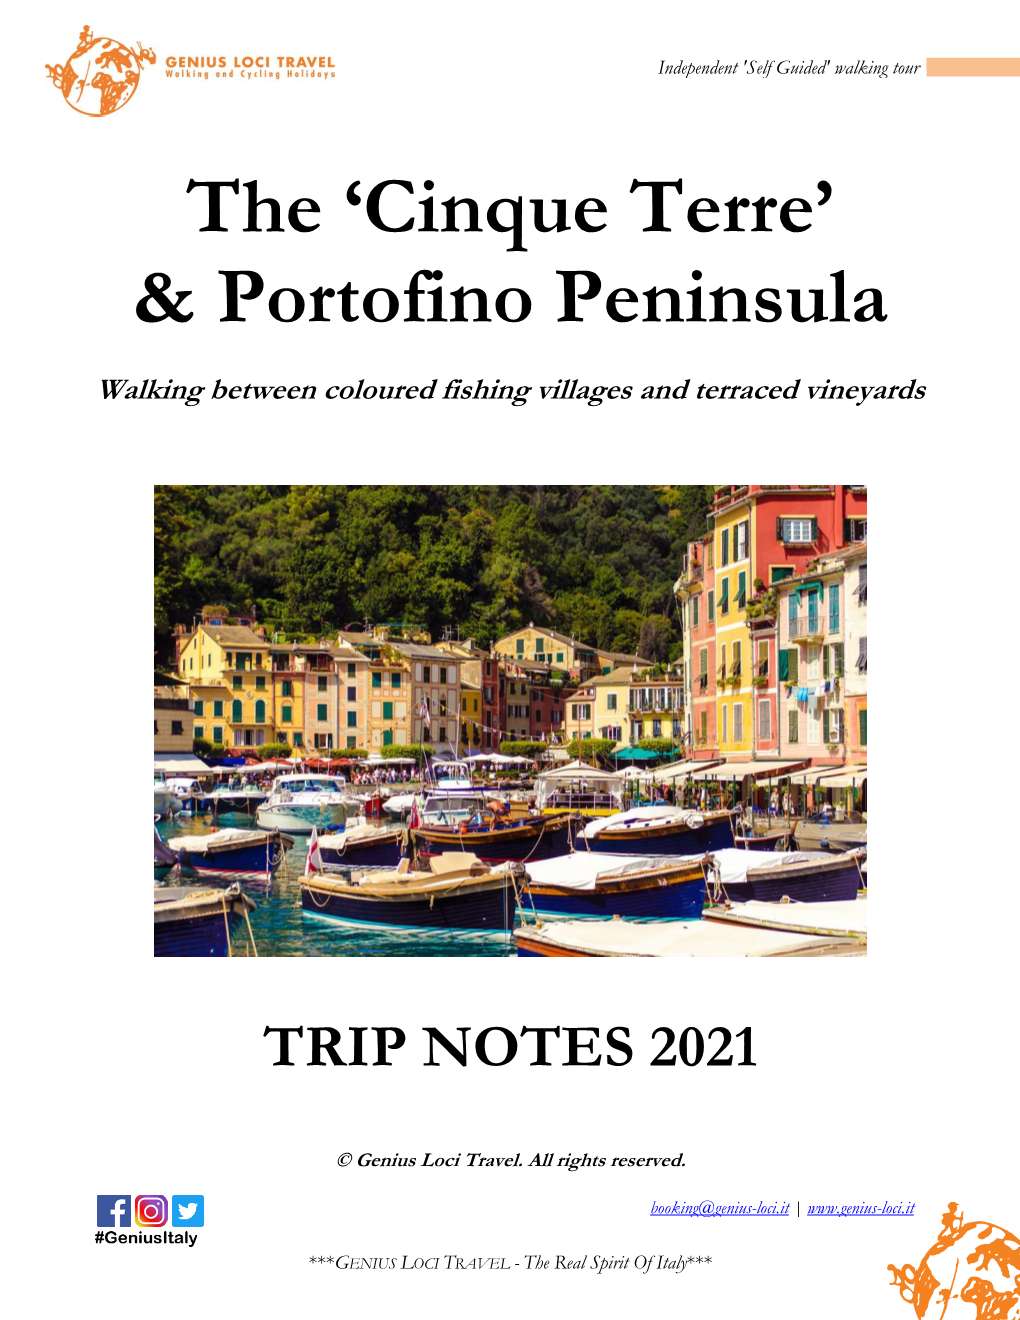 Cinque Terre’ & Portofino Peninsula